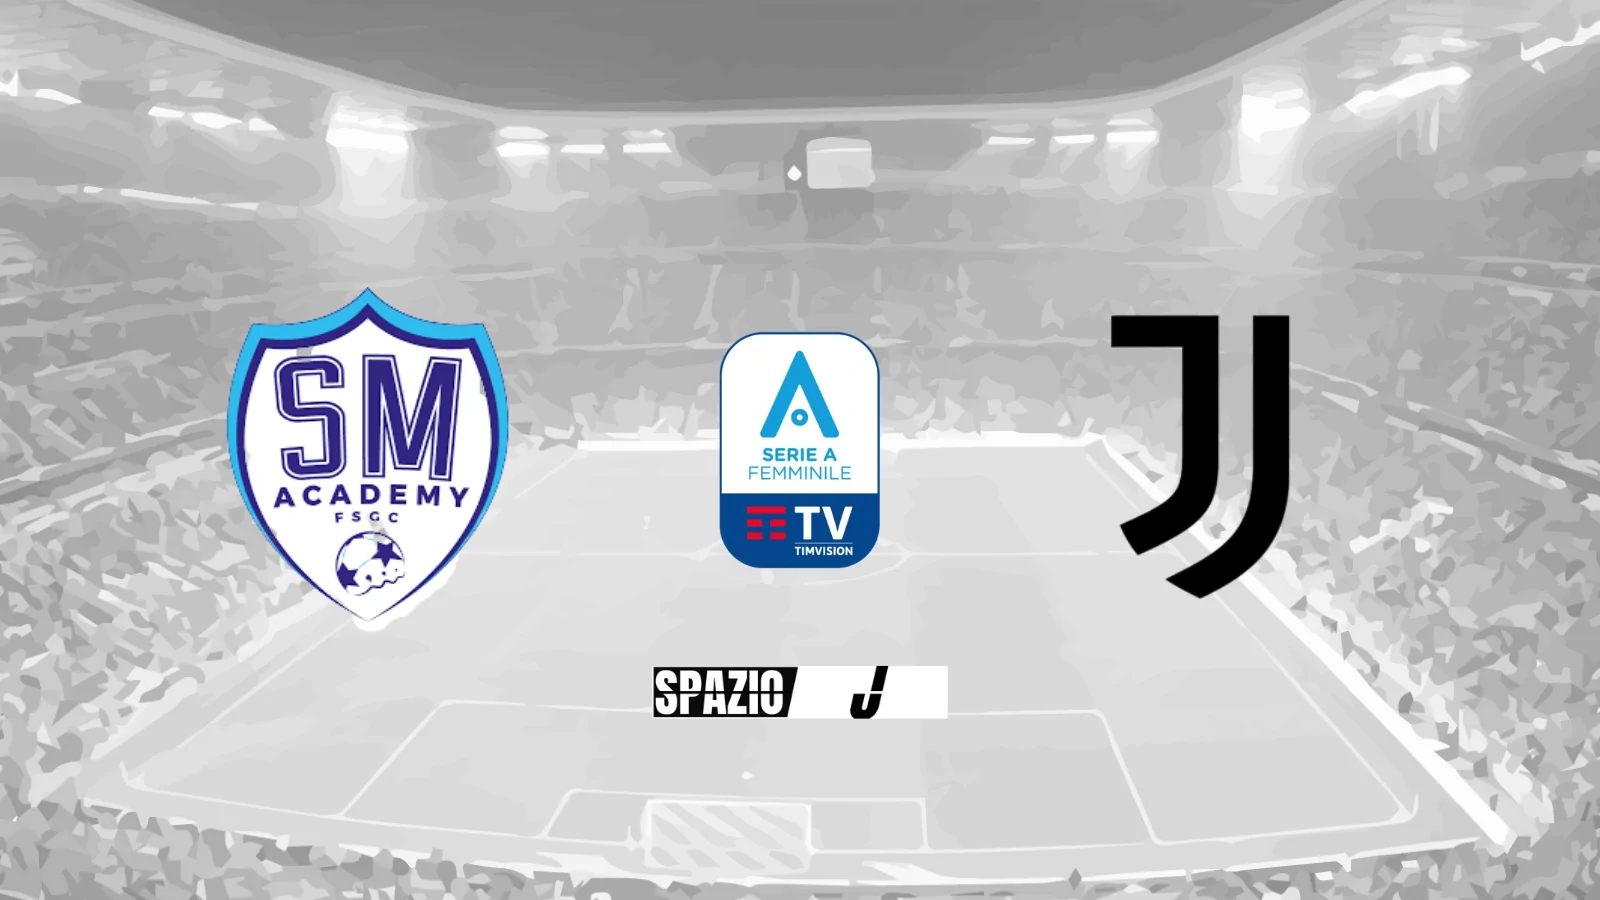 San Marino Academy-Juventus Women 1-3: vincono le bianconere con un autogol, Lina Hurtig e Cristiana Girelli